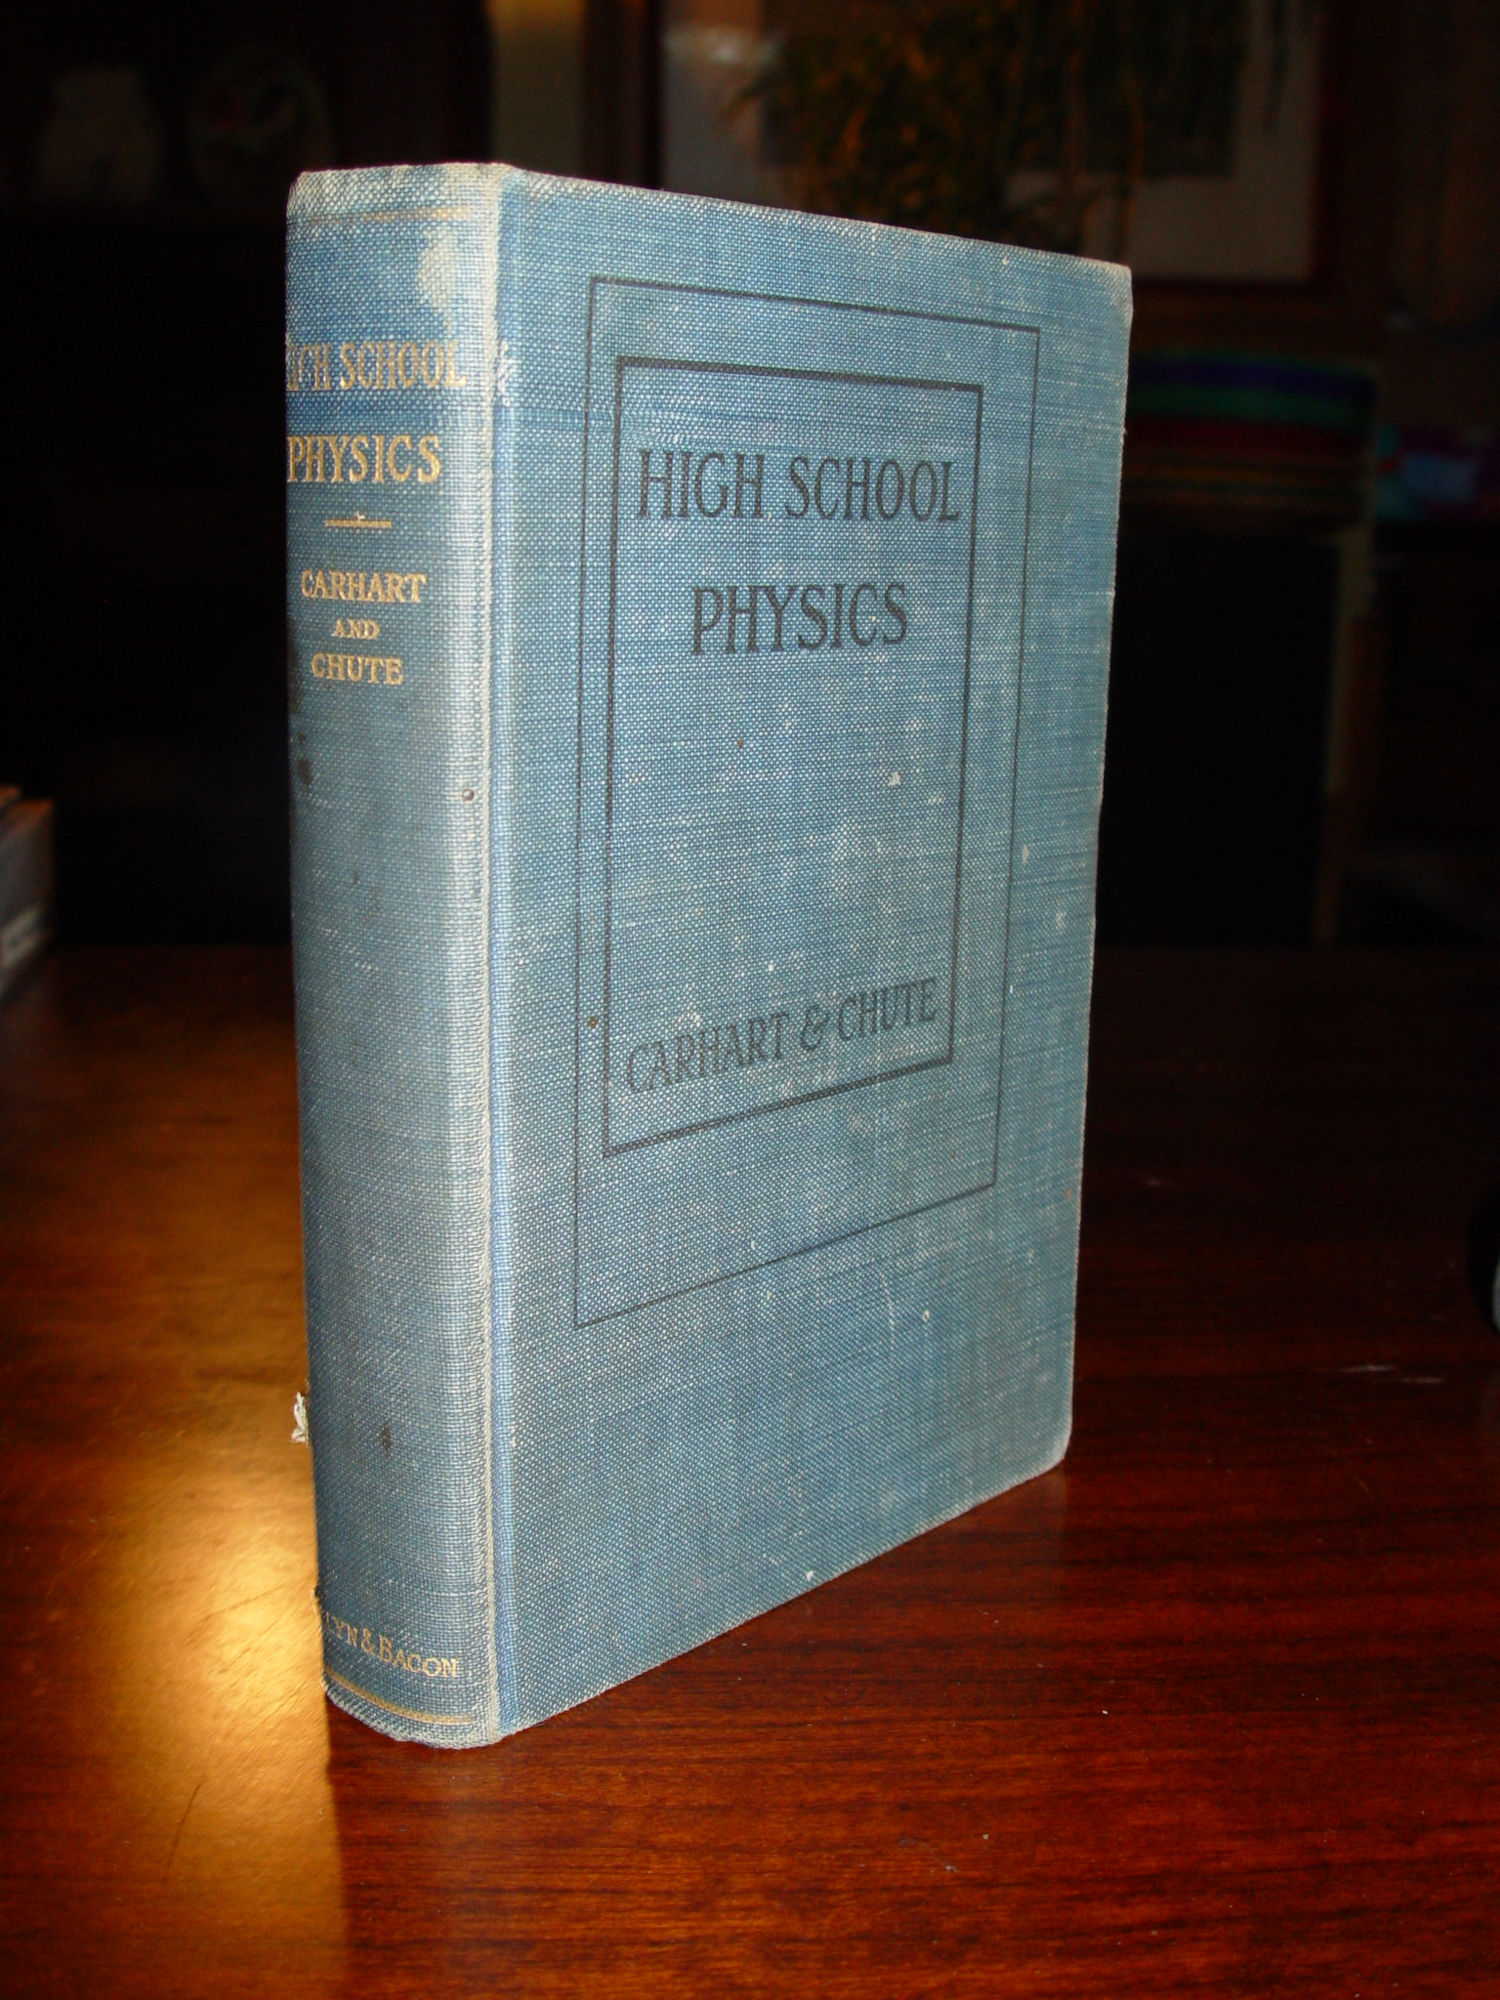 High School Physics Carhart & Chute;
                        Allyn and Bacon, 1907